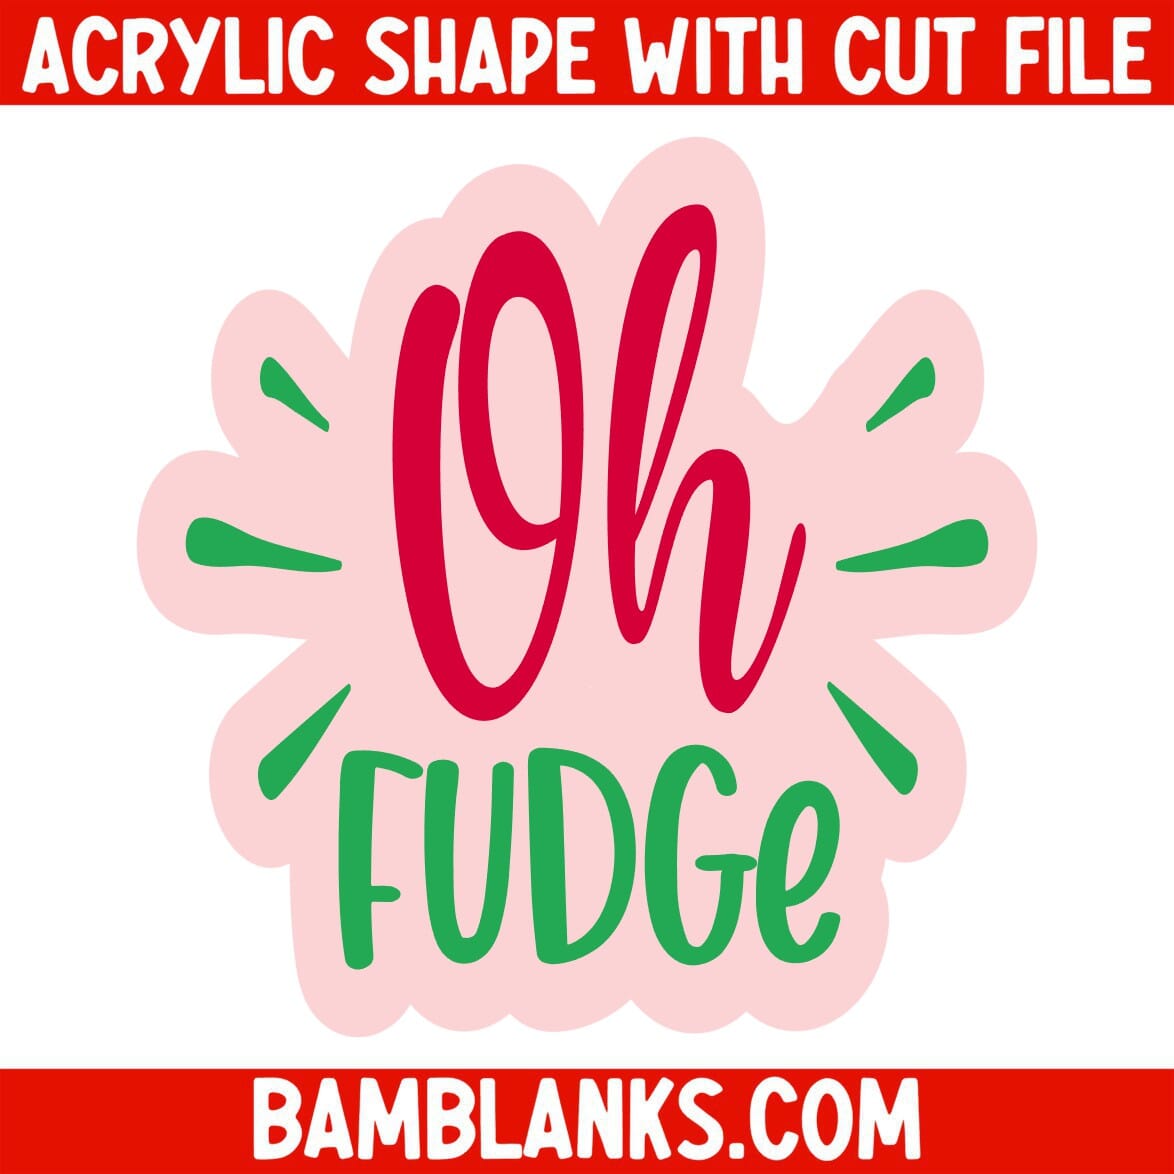 Fudge - Acrylic Shape #1093